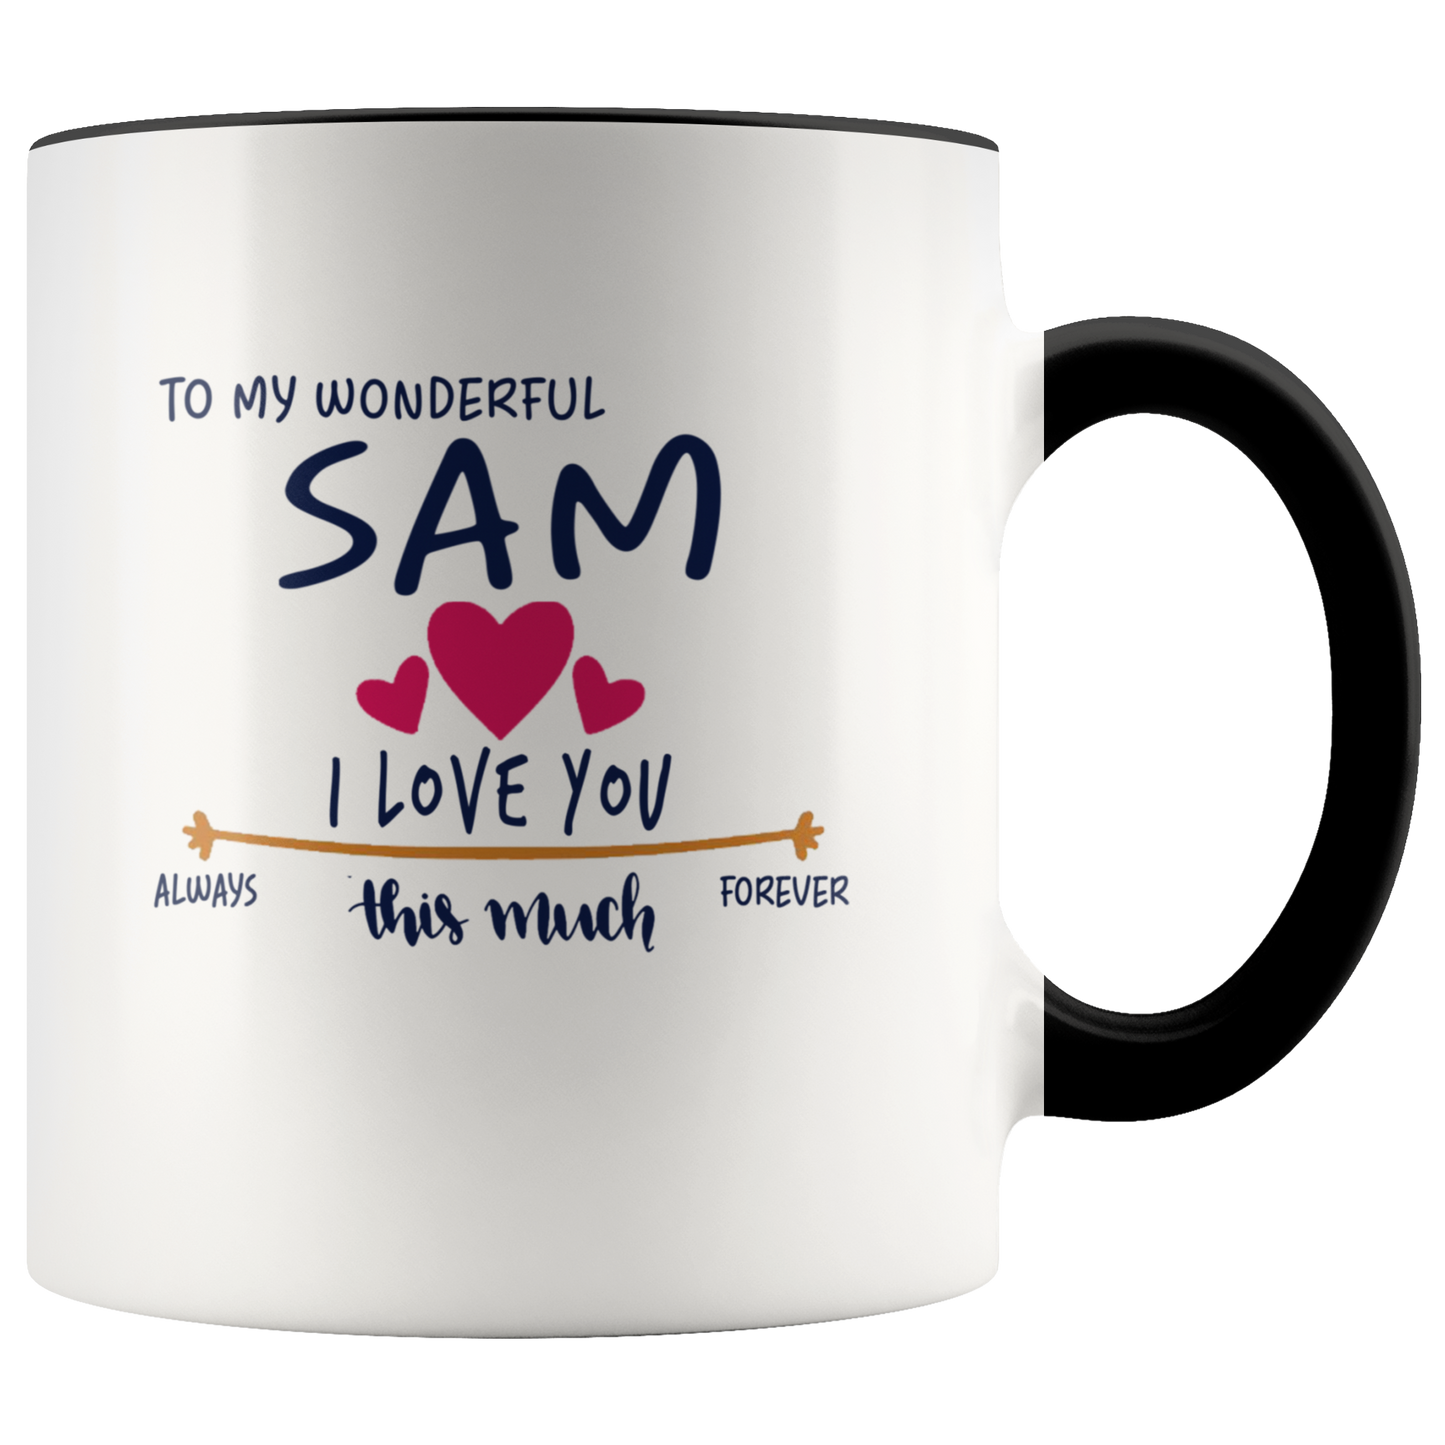 M-21260667-sp-23224 - Valentines Day Coffee Mug with Name Sam - to My Wonderful Sa